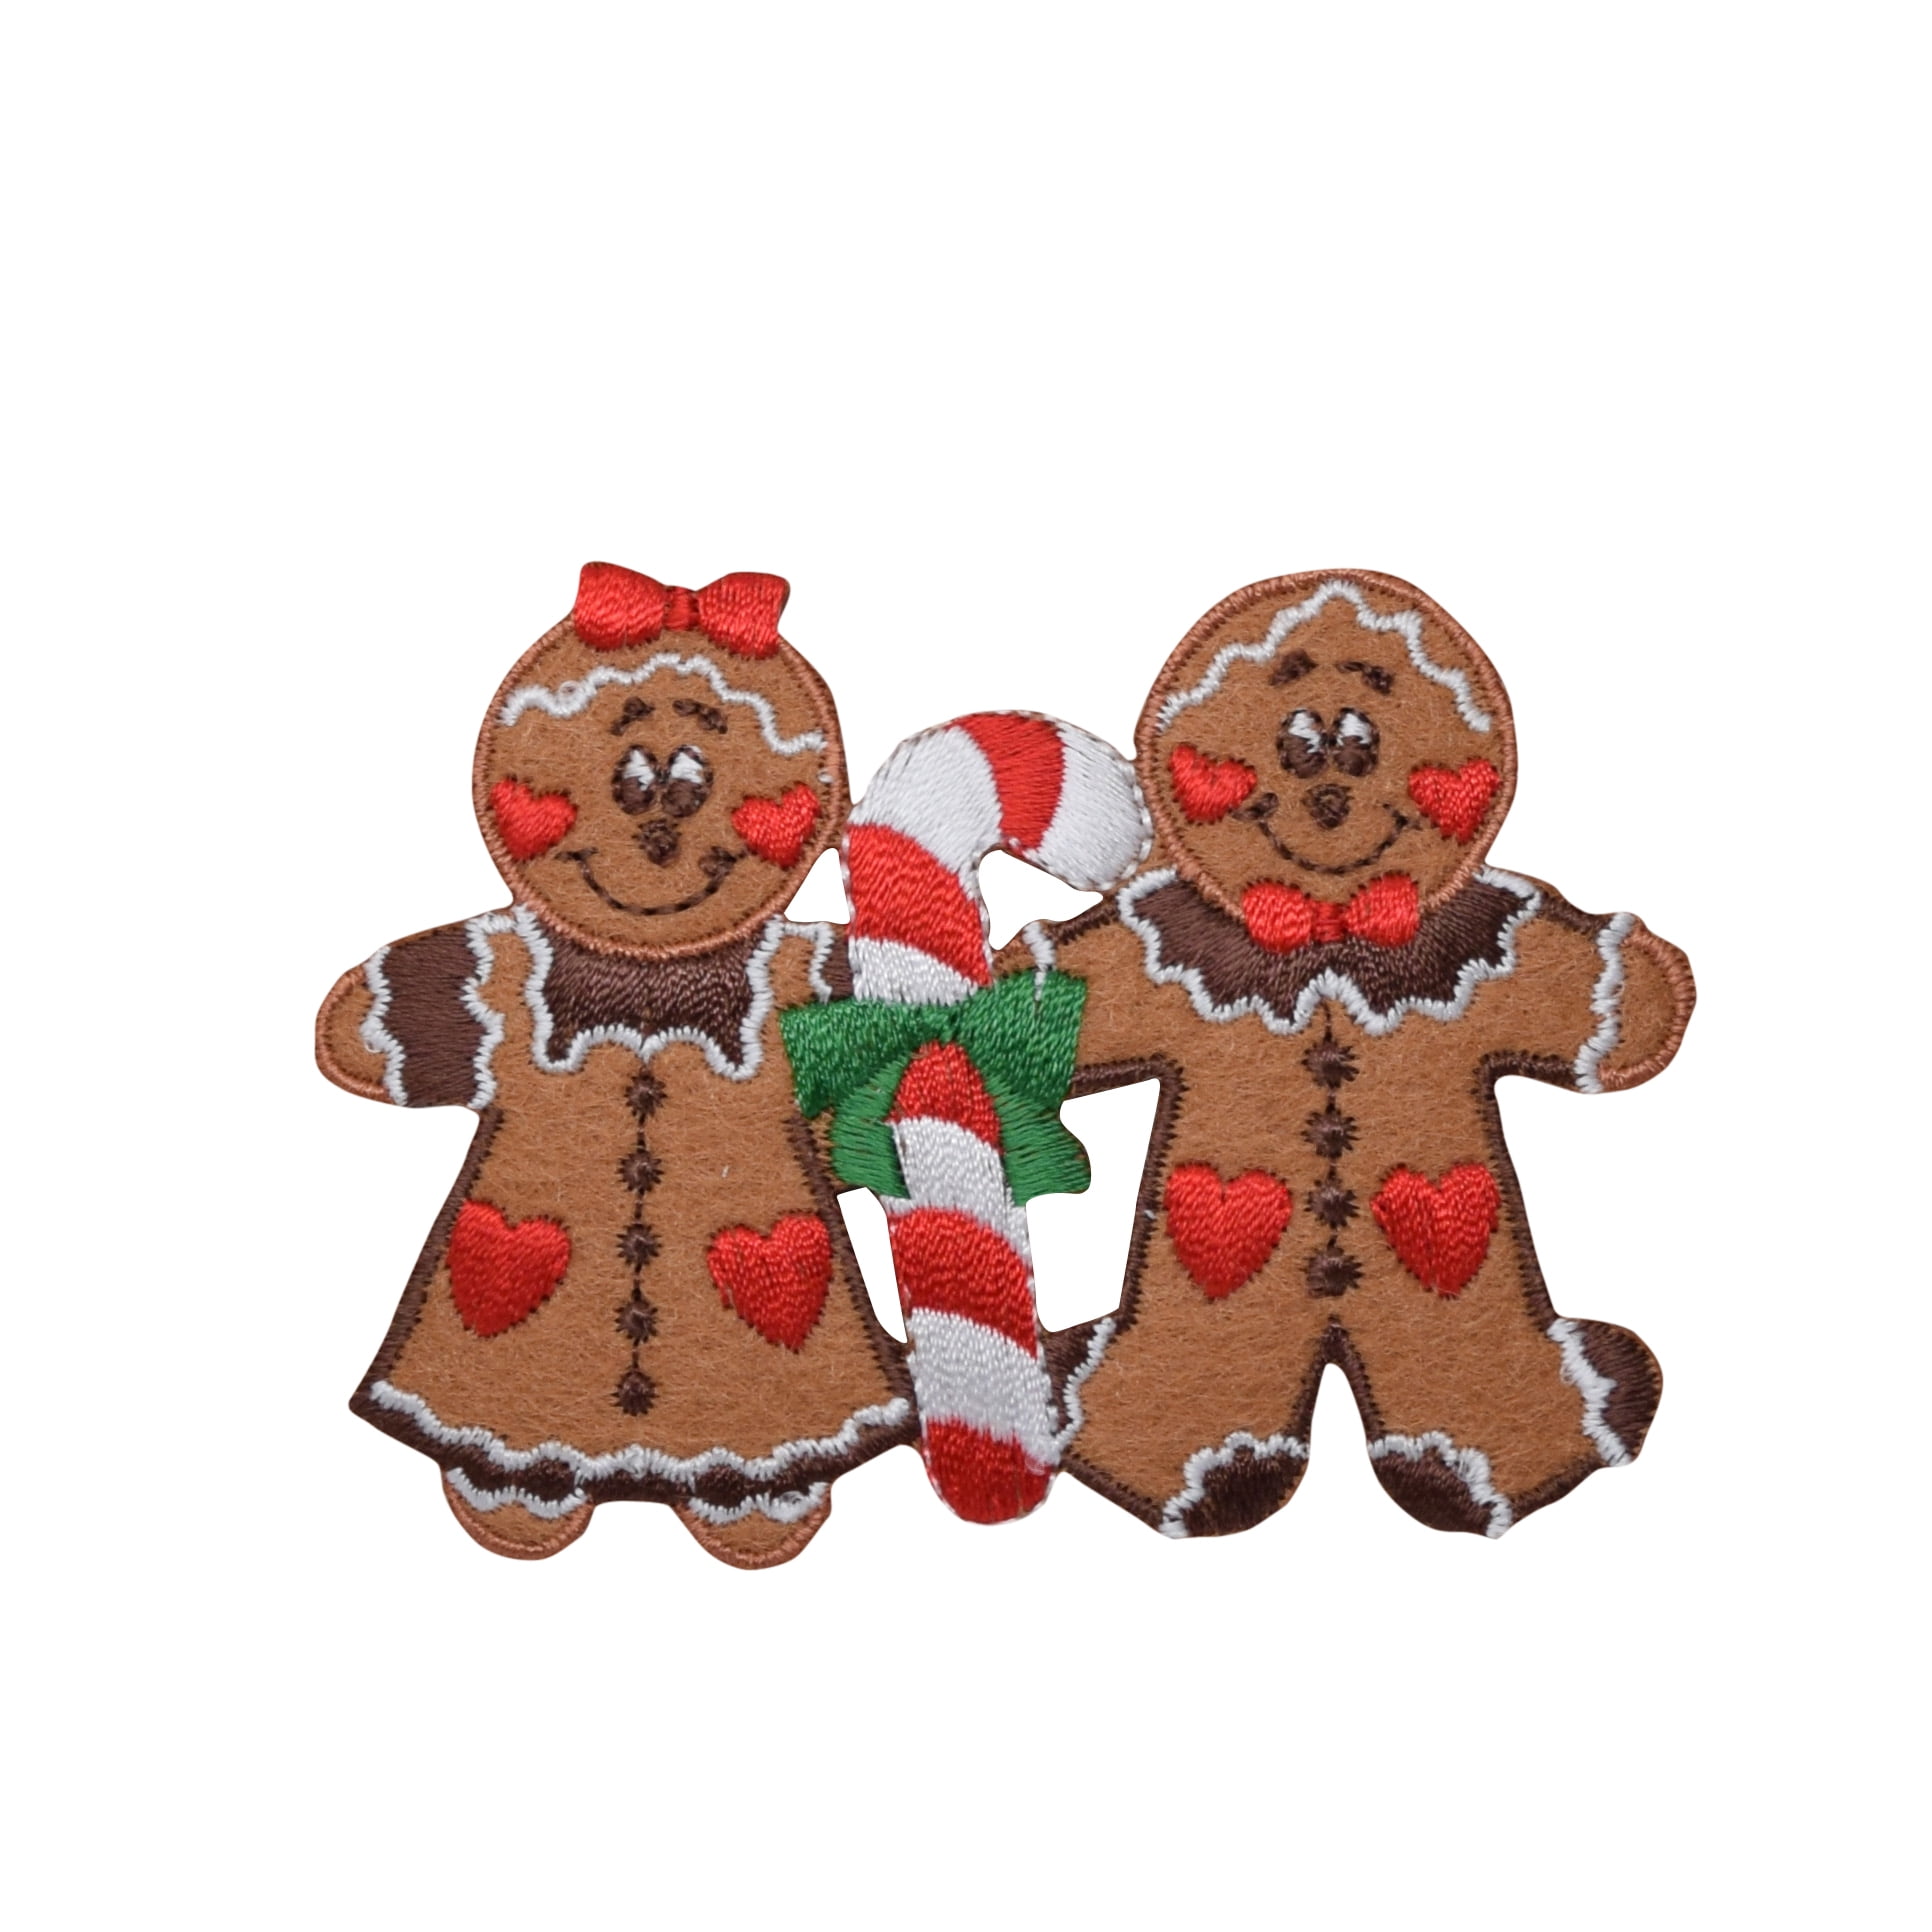 Graduation Ginger Handmade Embroidered Felt Gingerbread Man/Girl Ornament